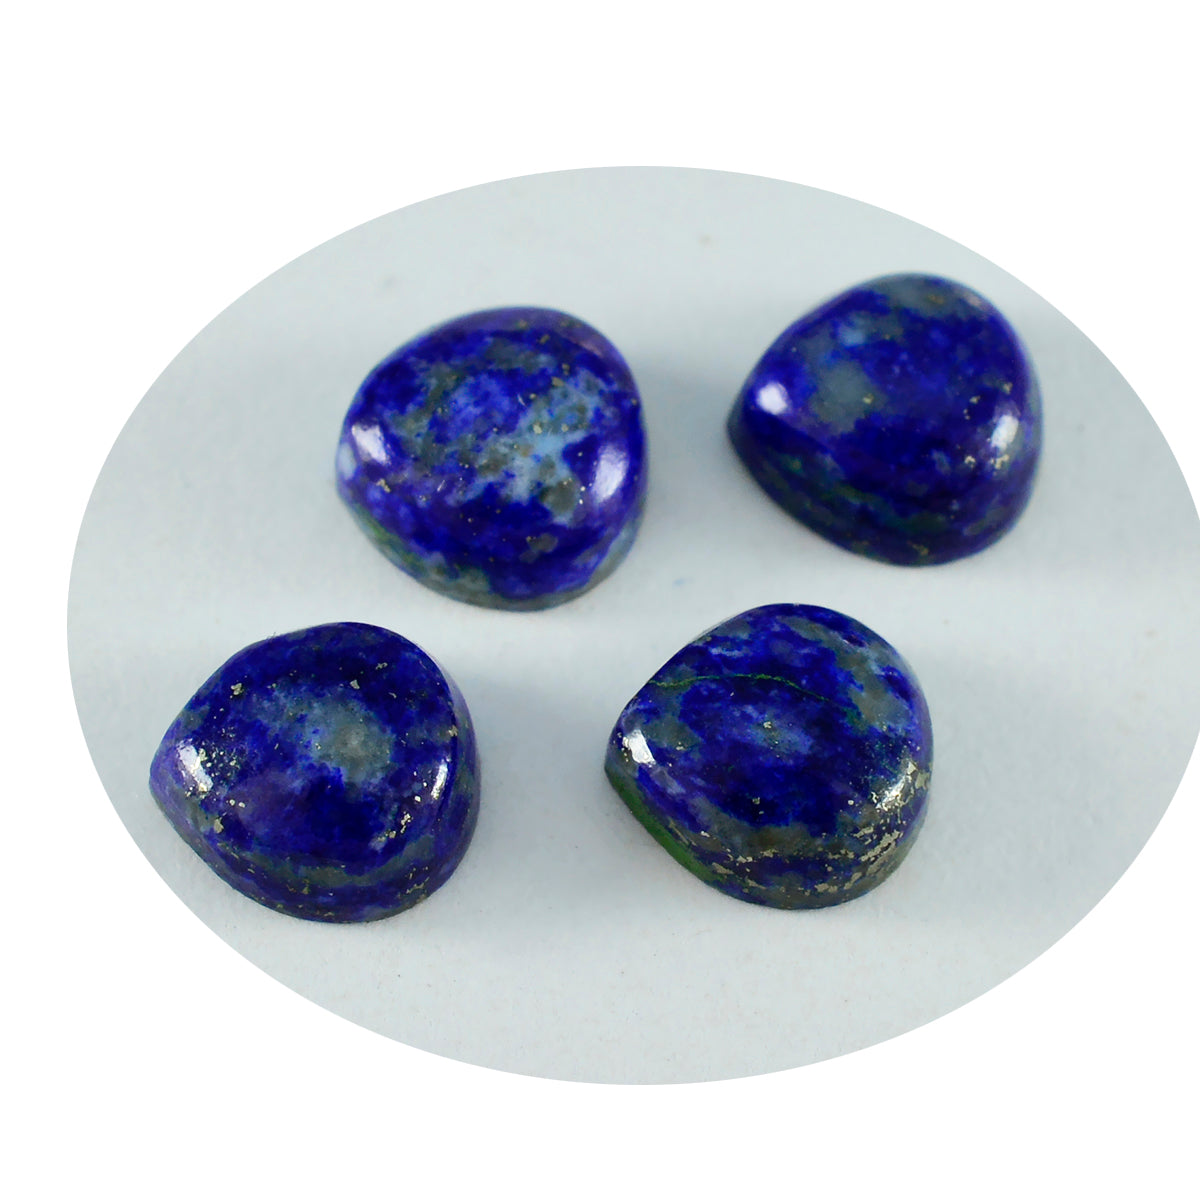 Riyogems 1PC Blauwe Lapis Lazuli Cabochon 14x14 mm Hartvorm mooie Kwaliteit Losse Edelstenen